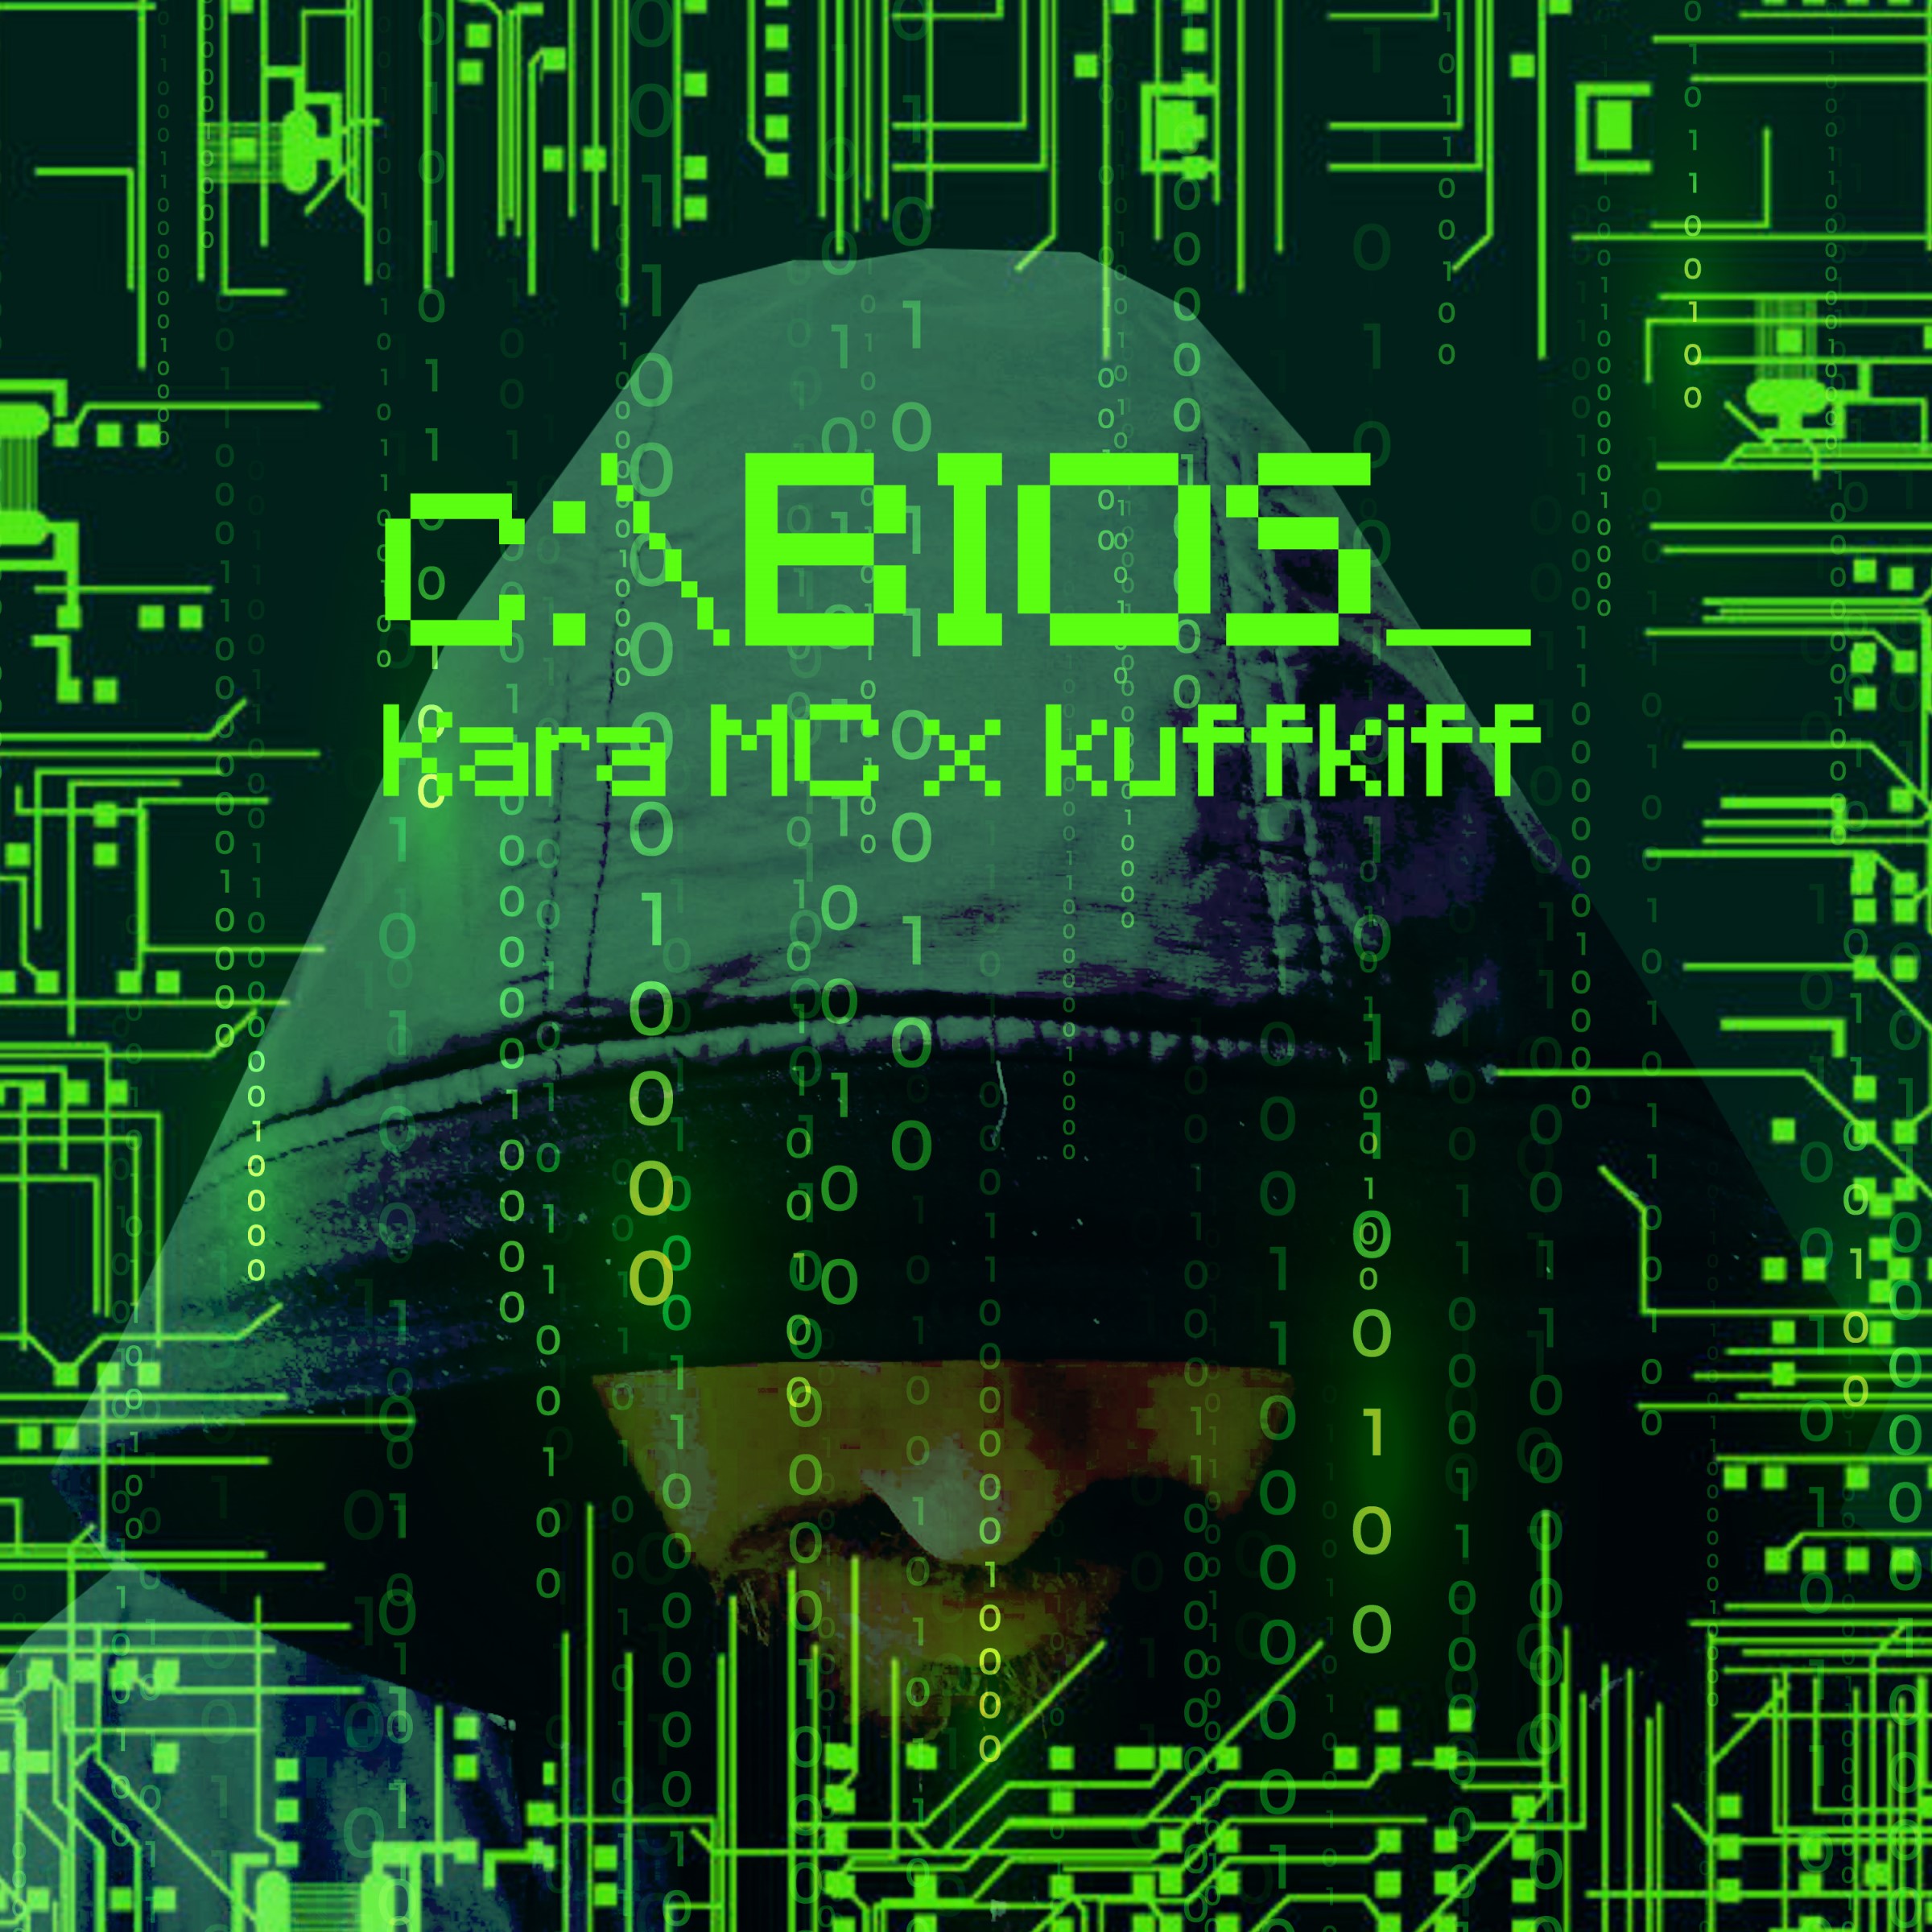 Kara MC x kuffkiff - BIOS